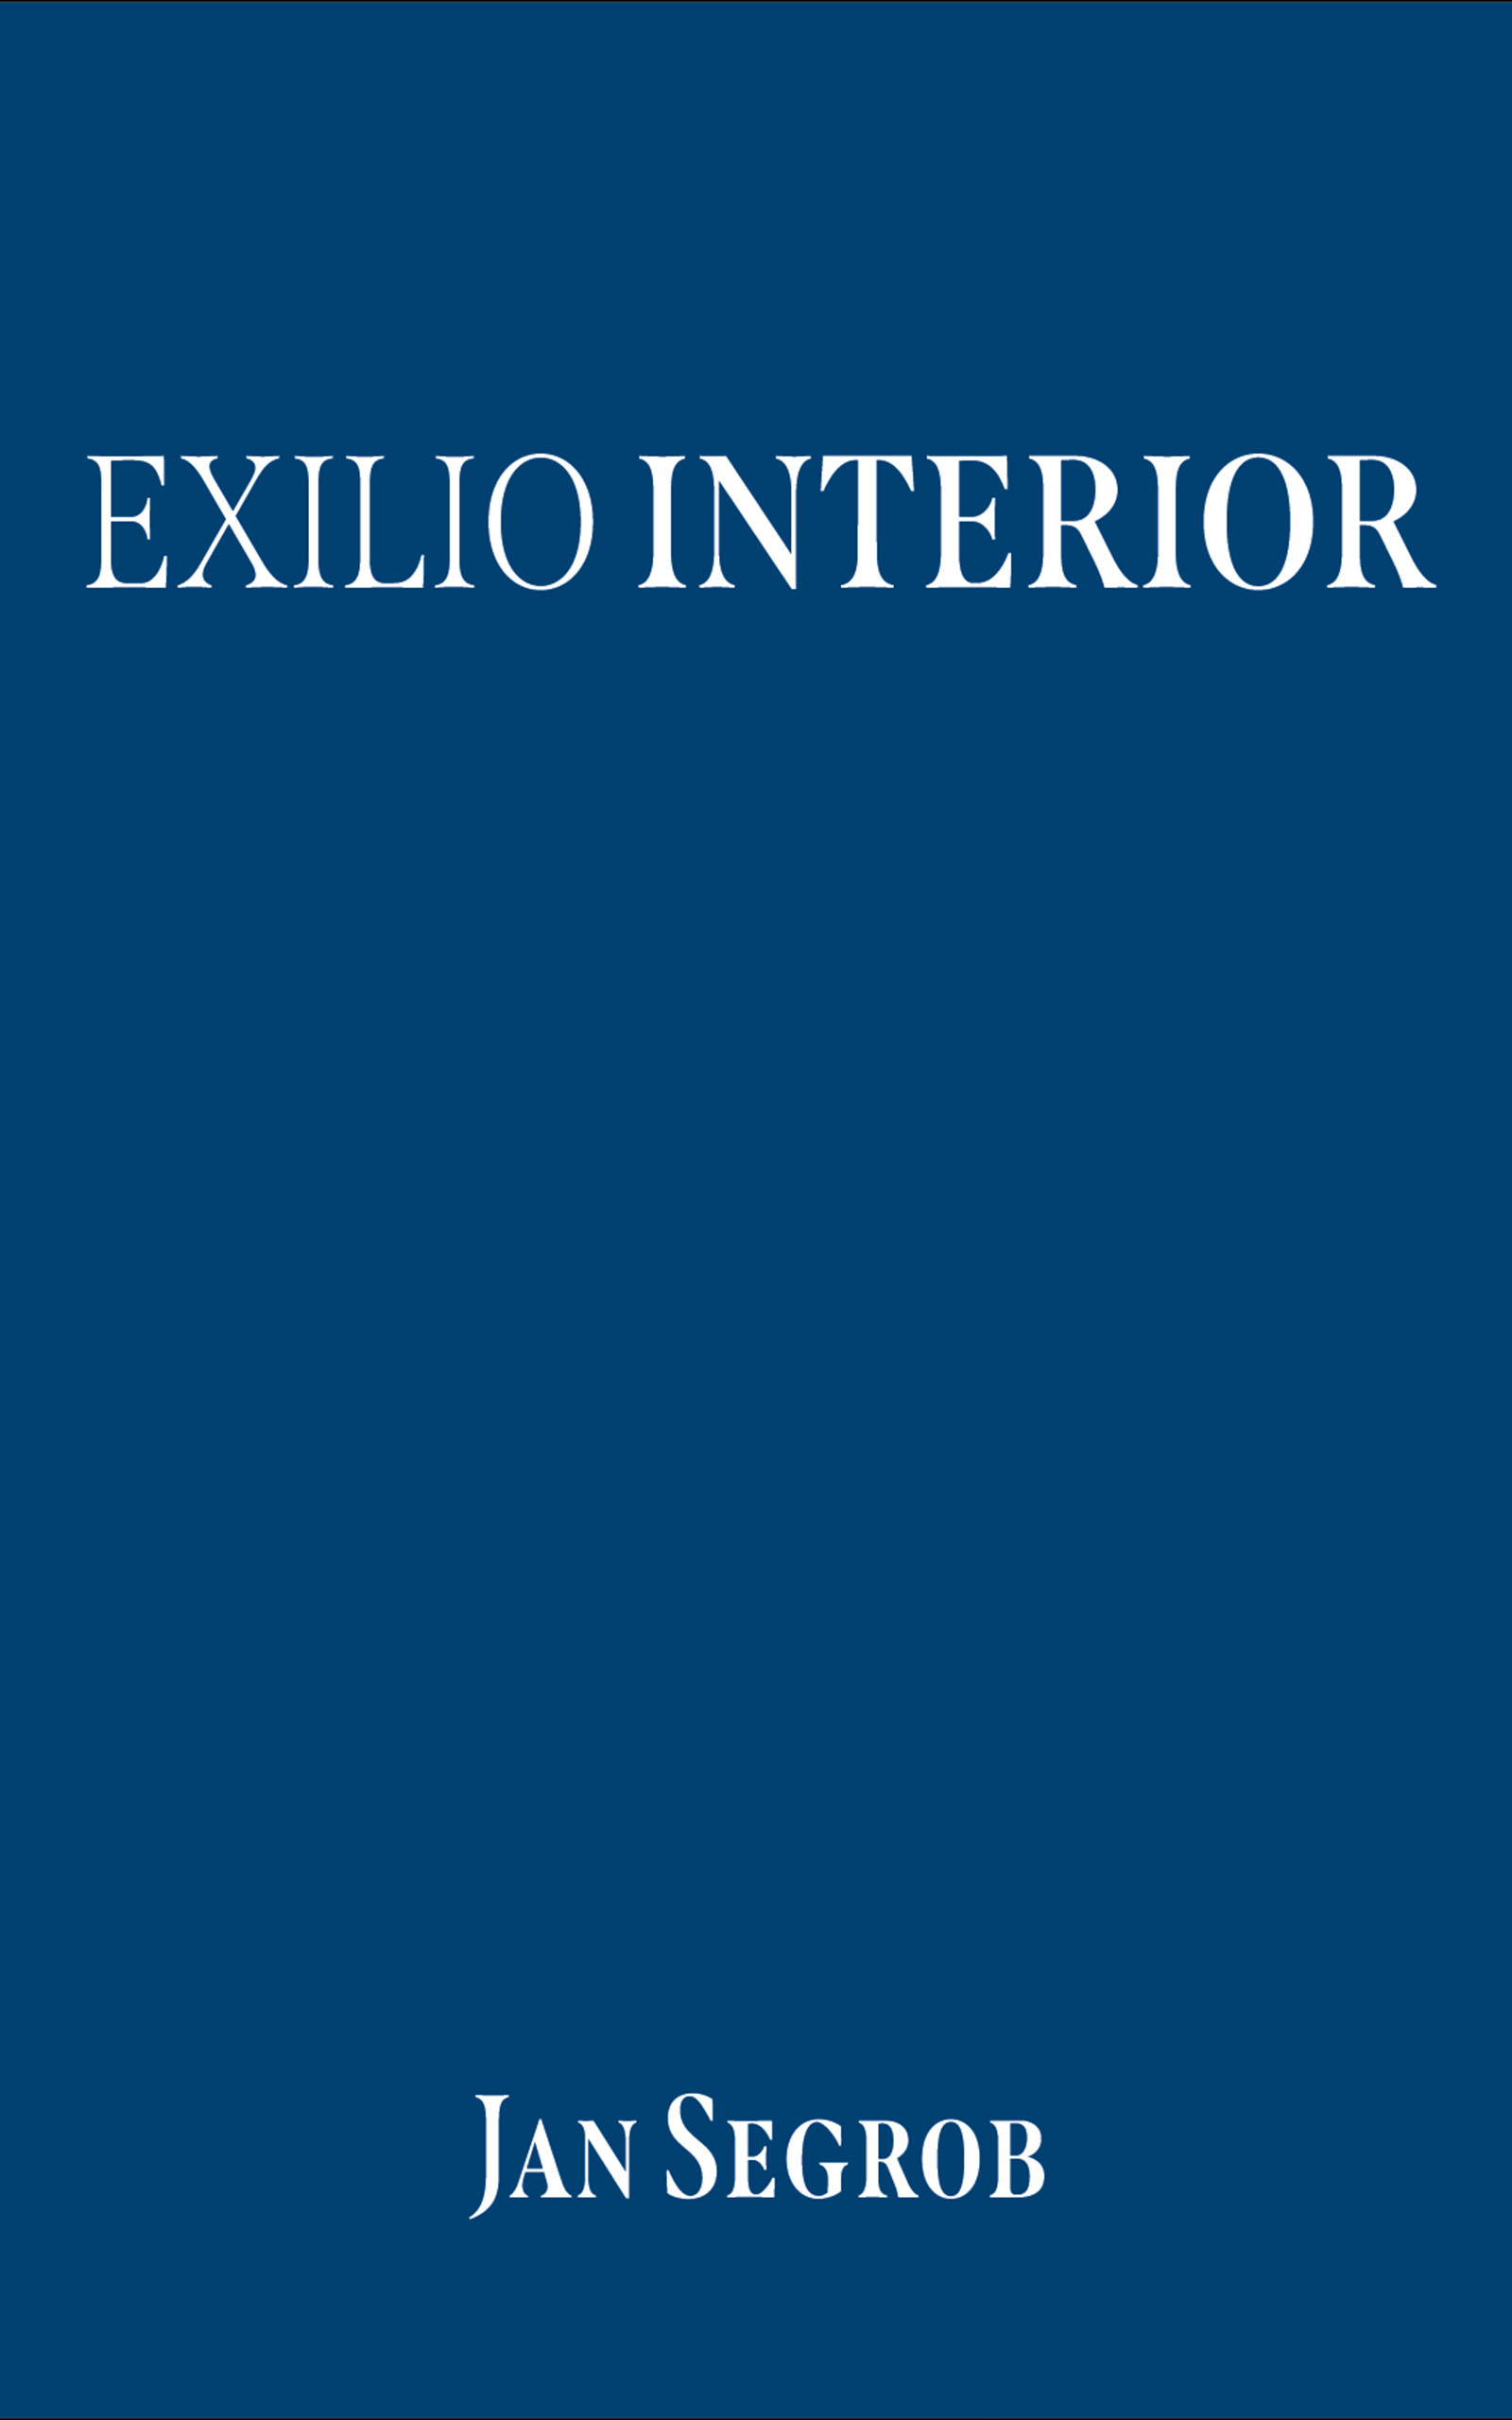 Exilio interior, de Jan Segrob